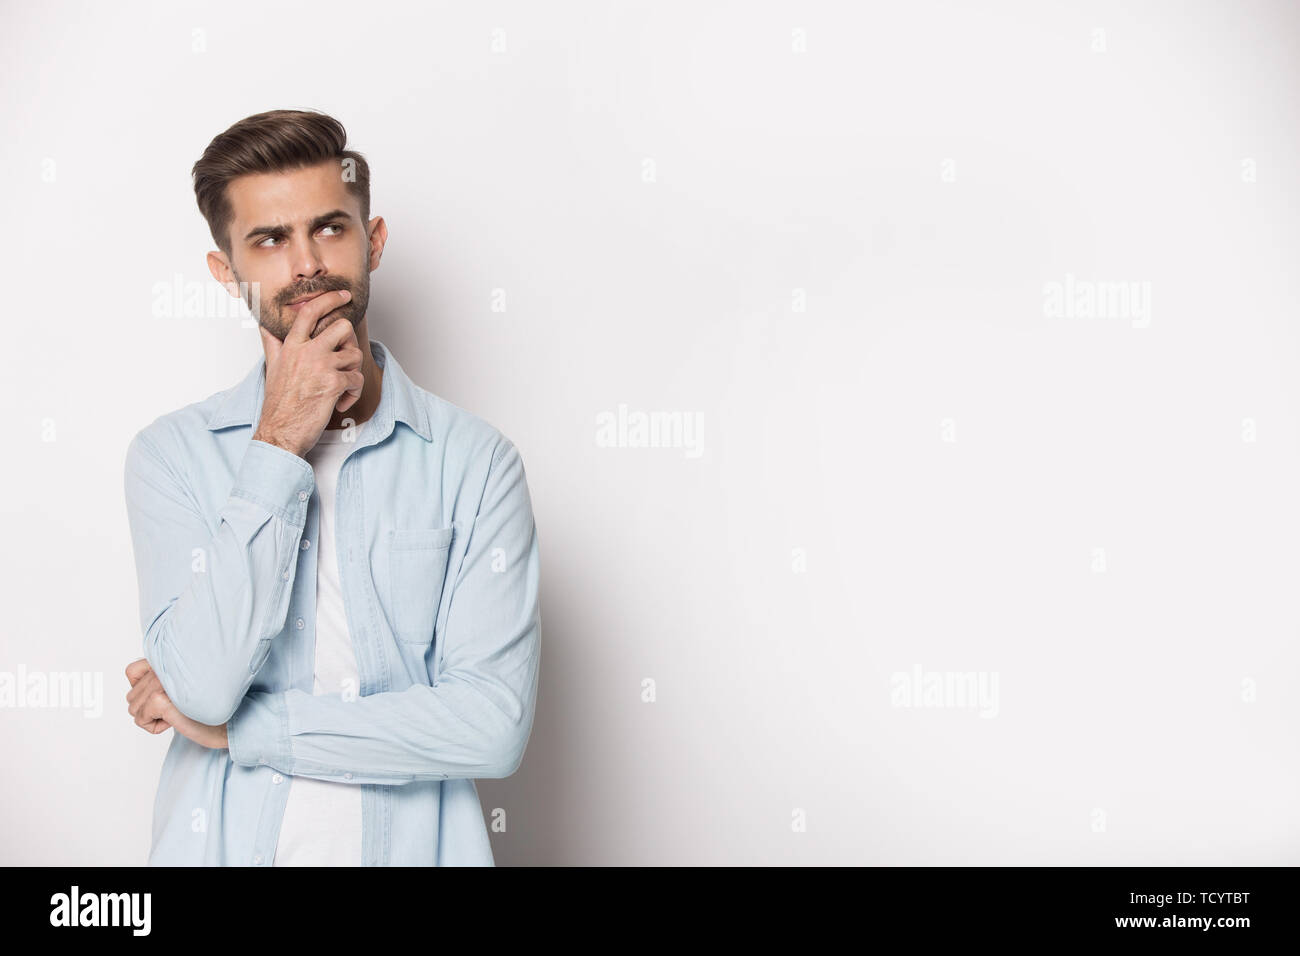 Pensive guy feeling doubtful pose isolated on white studio background Stock Photo